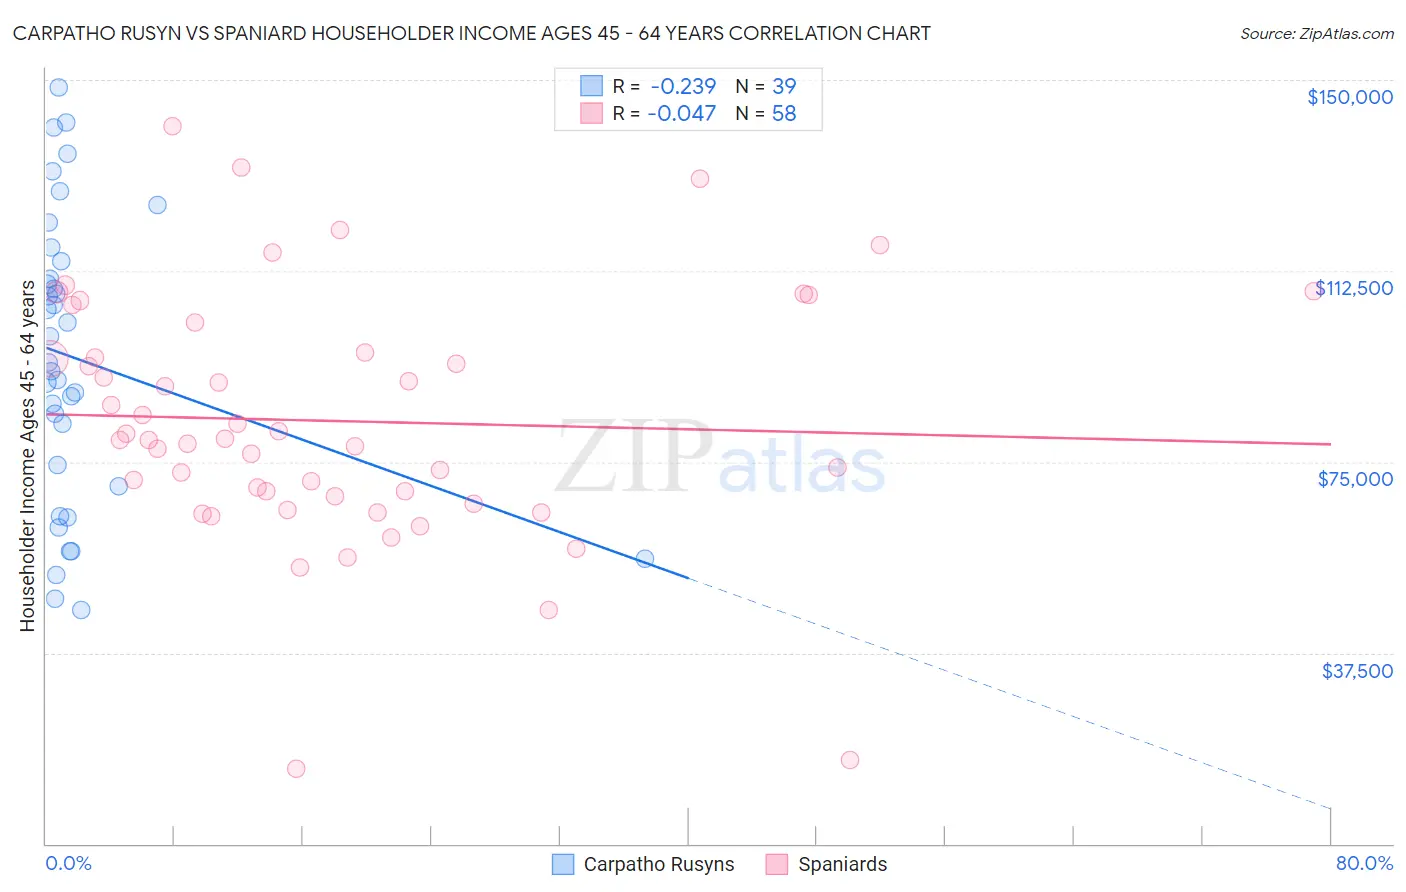 Carpatho Rusyn vs Spaniard Householder Income Ages 45 - 64 years